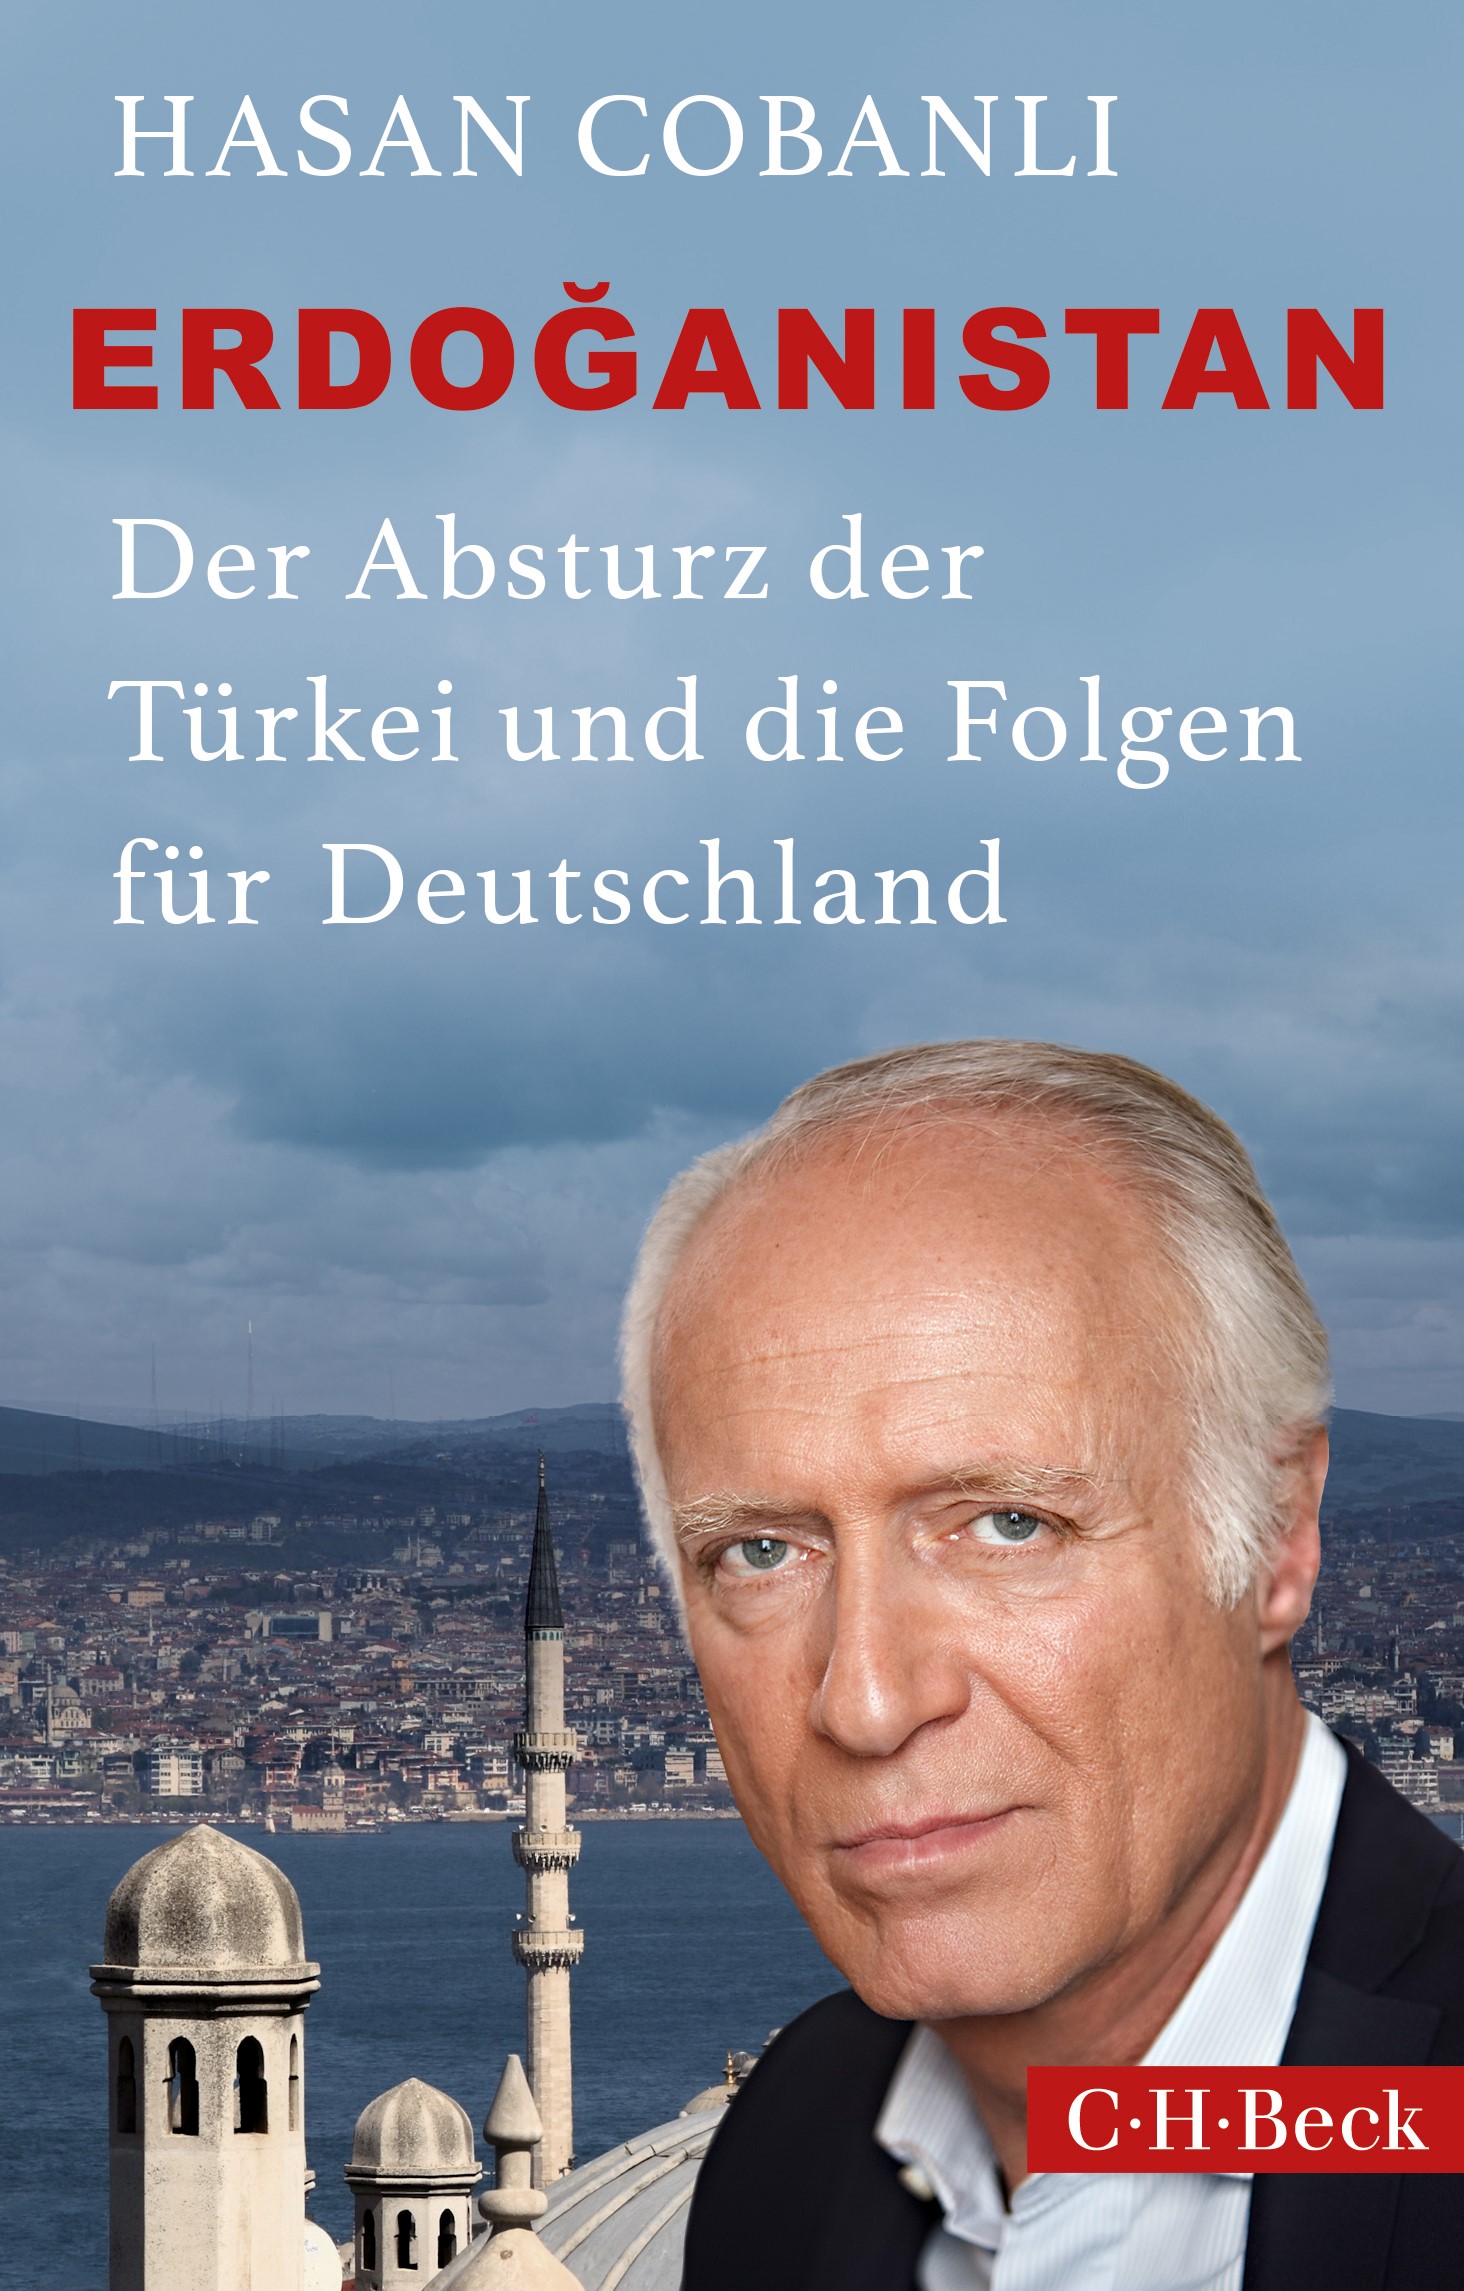 Cover: Cobanli, Hasan, Erdoganistan